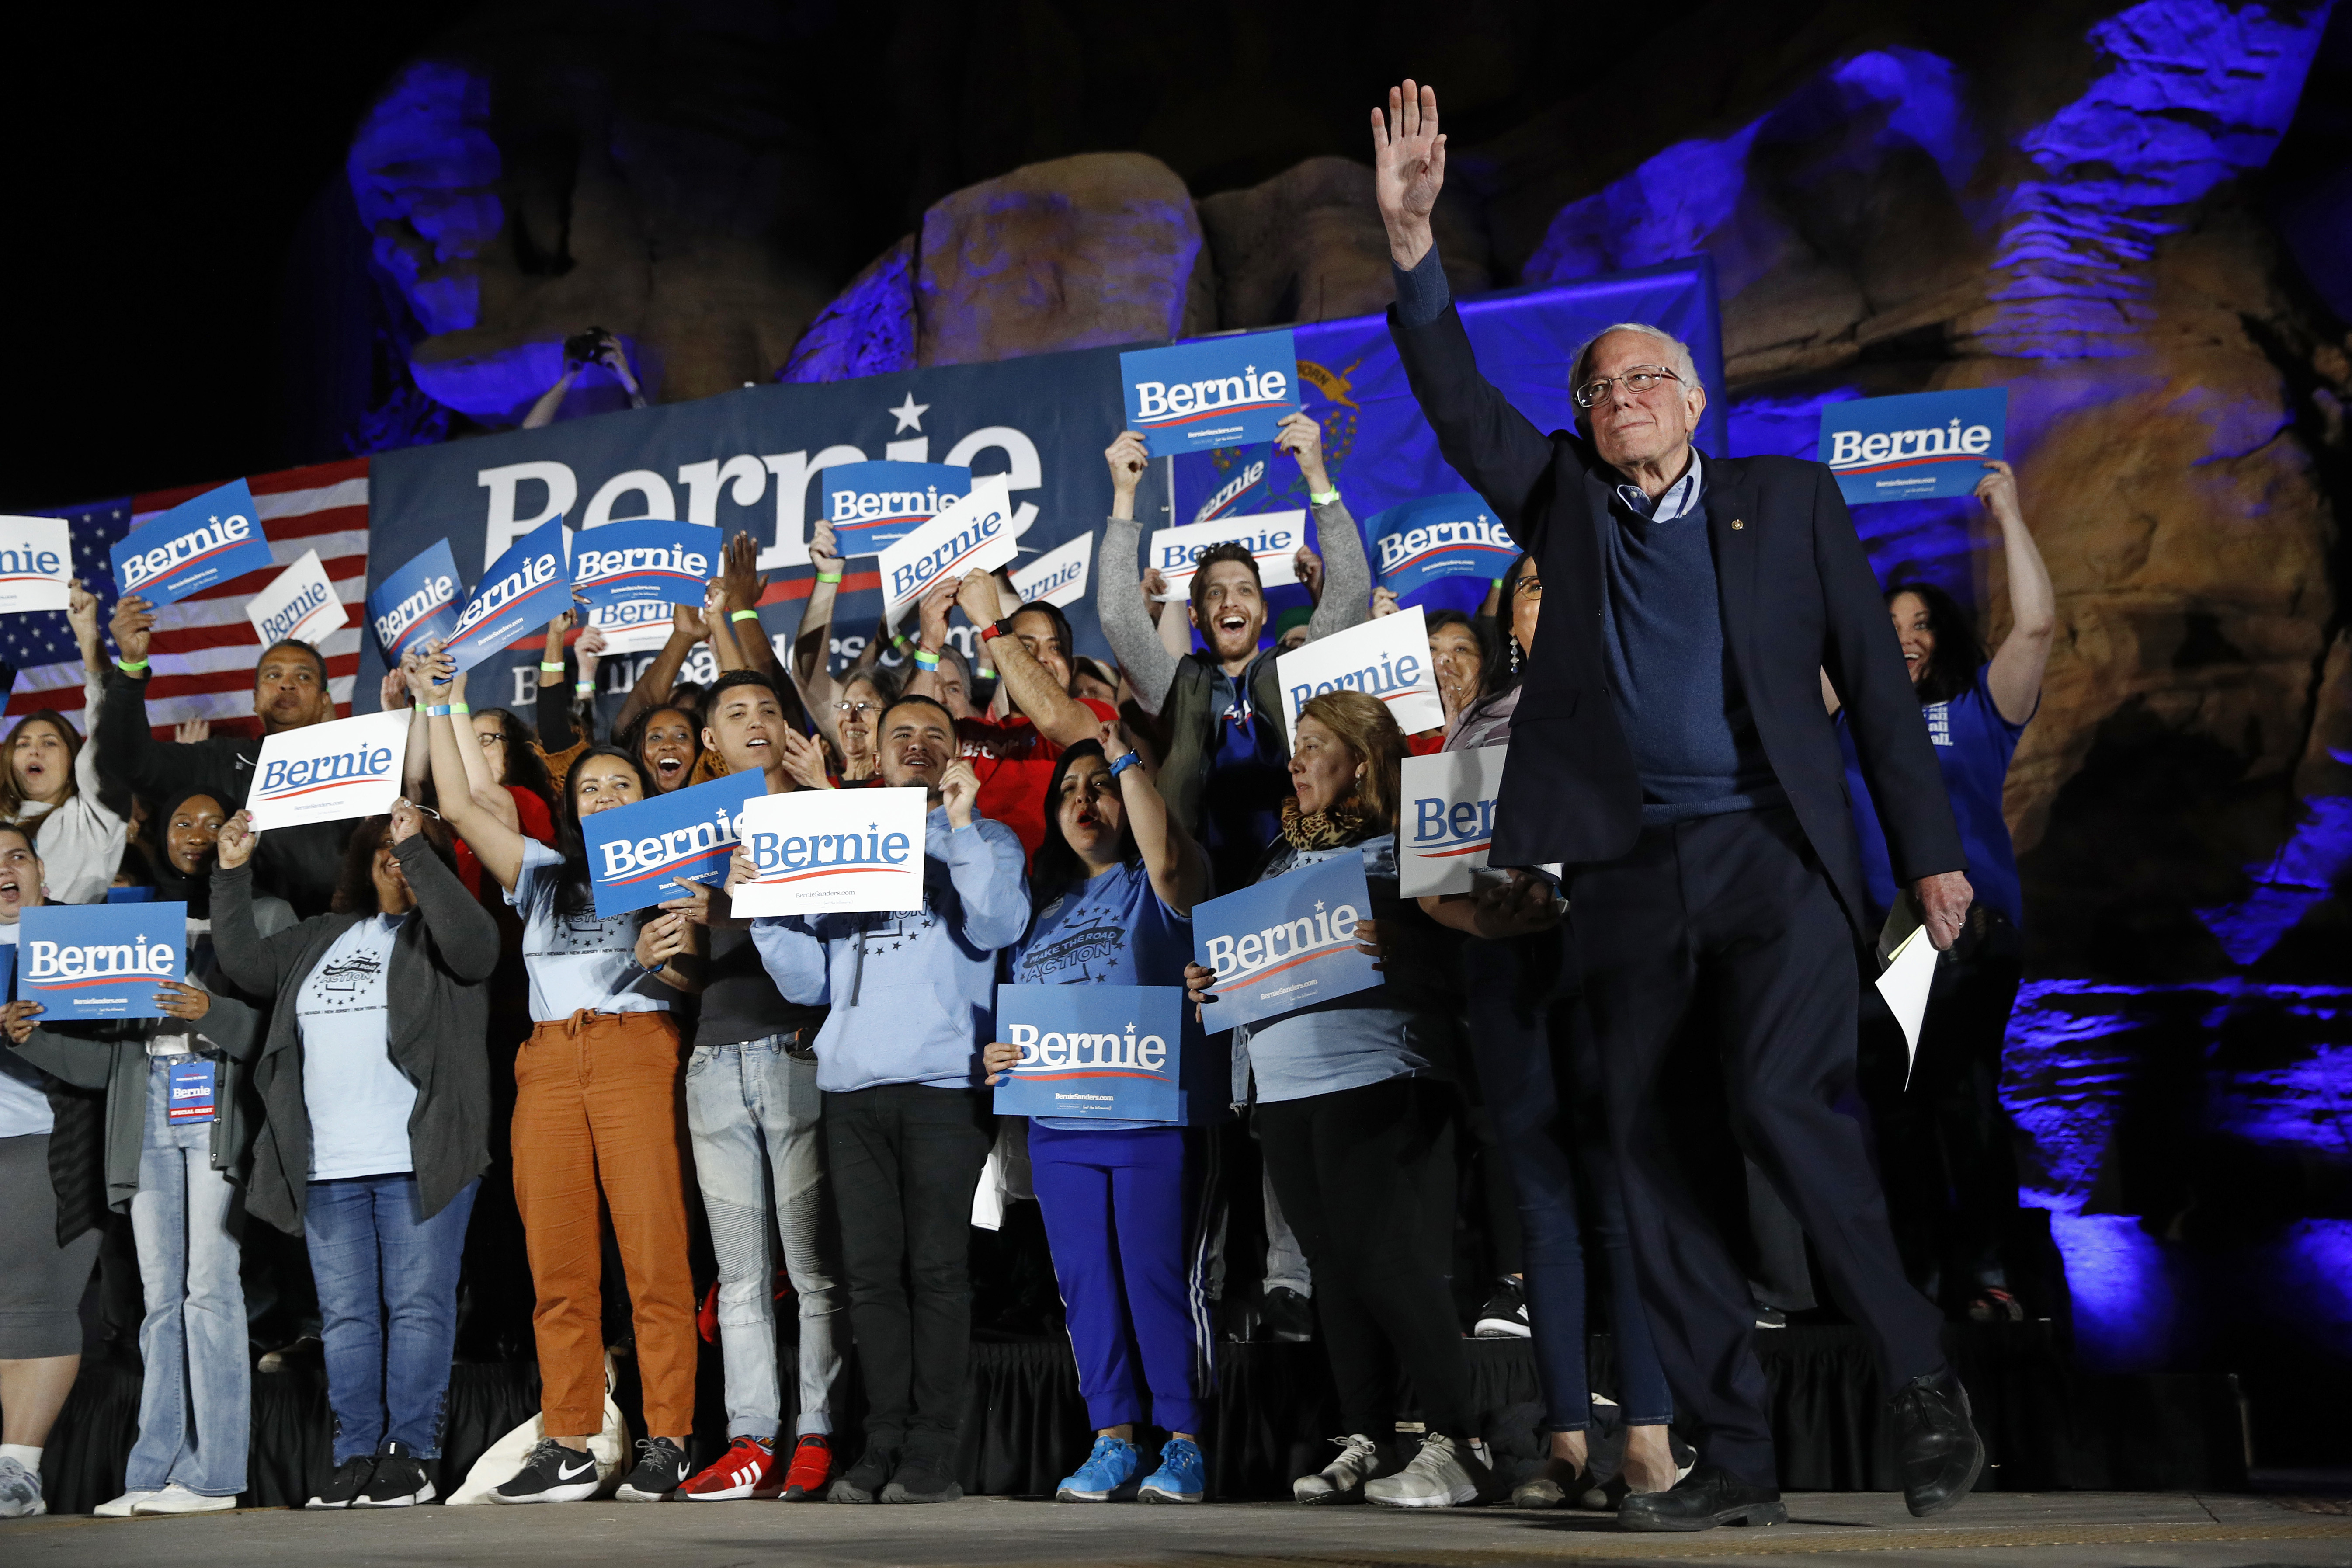 Democratic presidential candidate Sen. Bernie Sanders, I-Vt., walks onstage to speak at a campaign event at Springs Preserve in Las Vegas, Friday, Feb. 21, 2020. (AP Photo/Patrick Semansky)